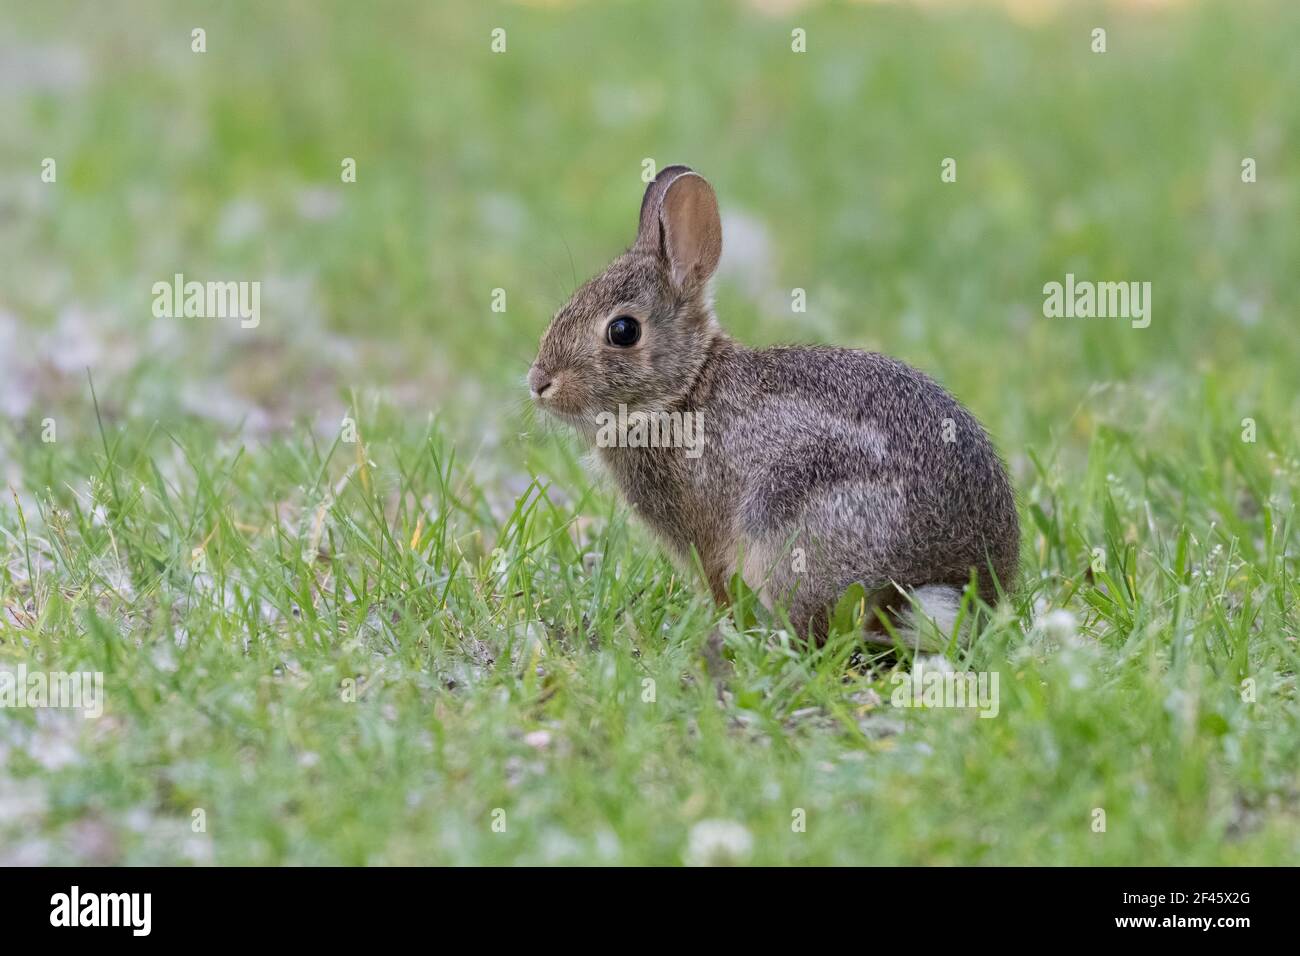 Baby rabbit (kitten) in grass Stock Photo